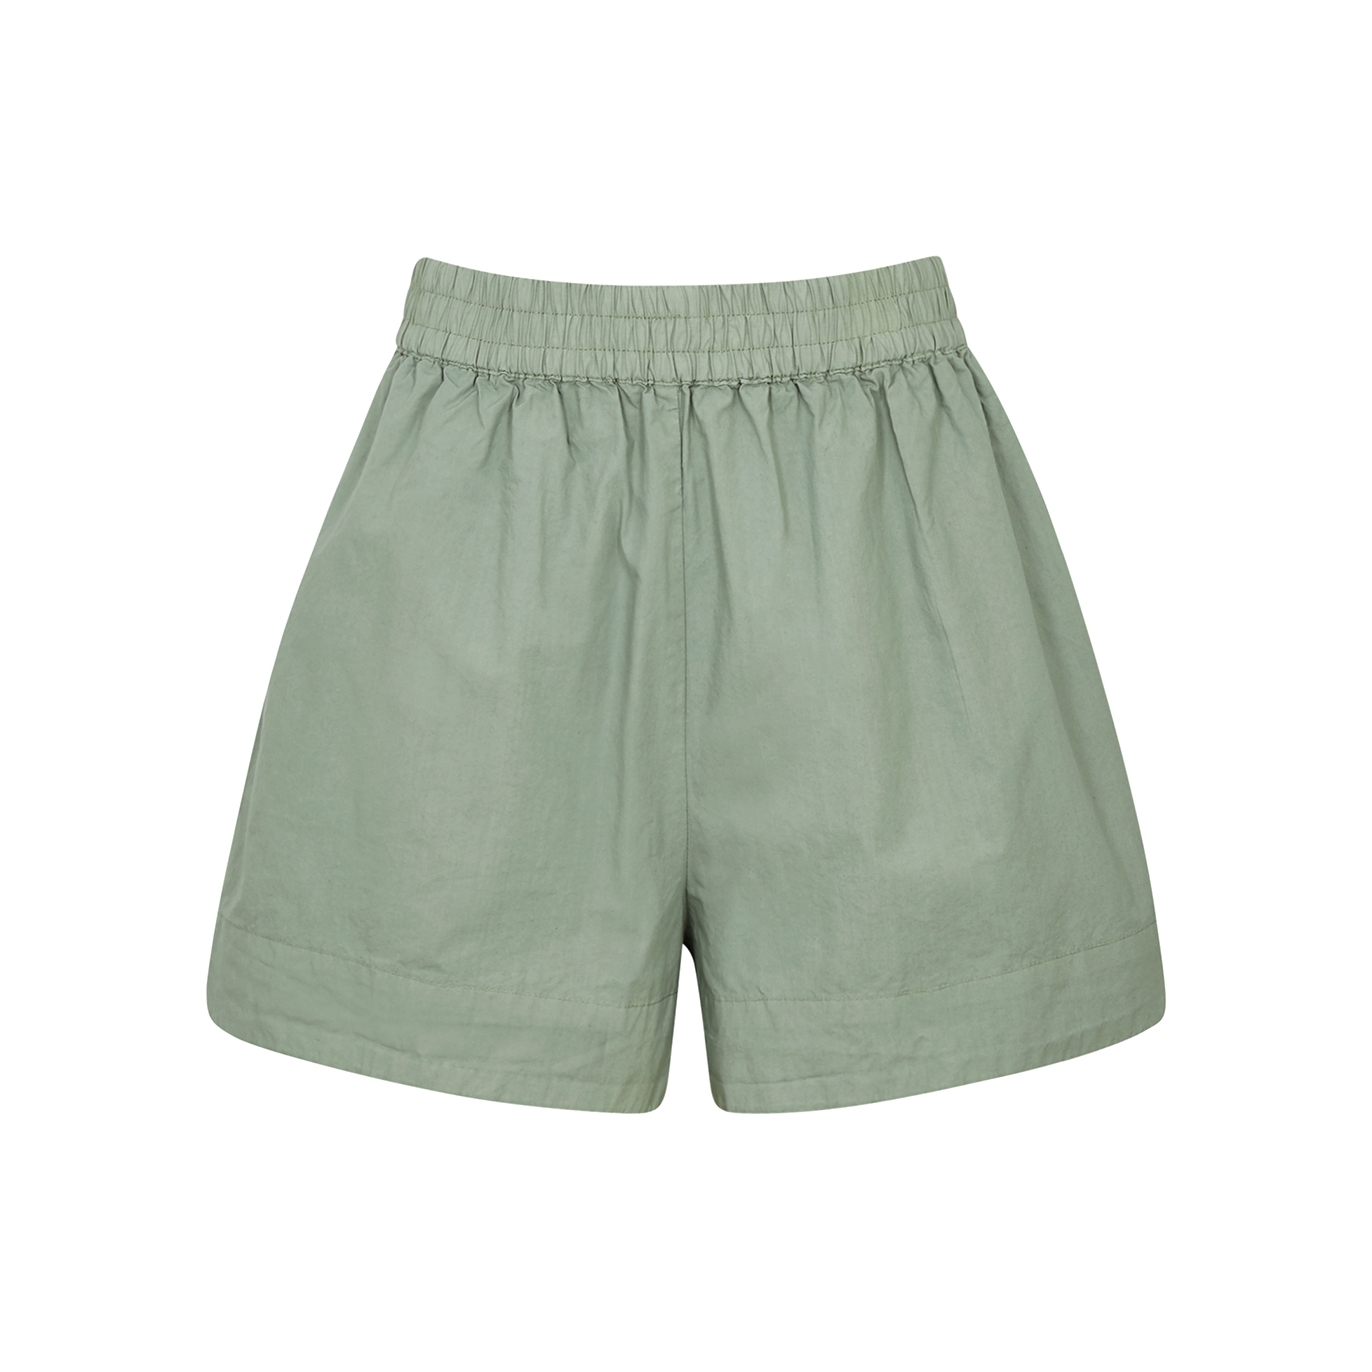 Lmnd Lemonade Chiara Cotton-poplin Shorts, Shorts, Dark Green